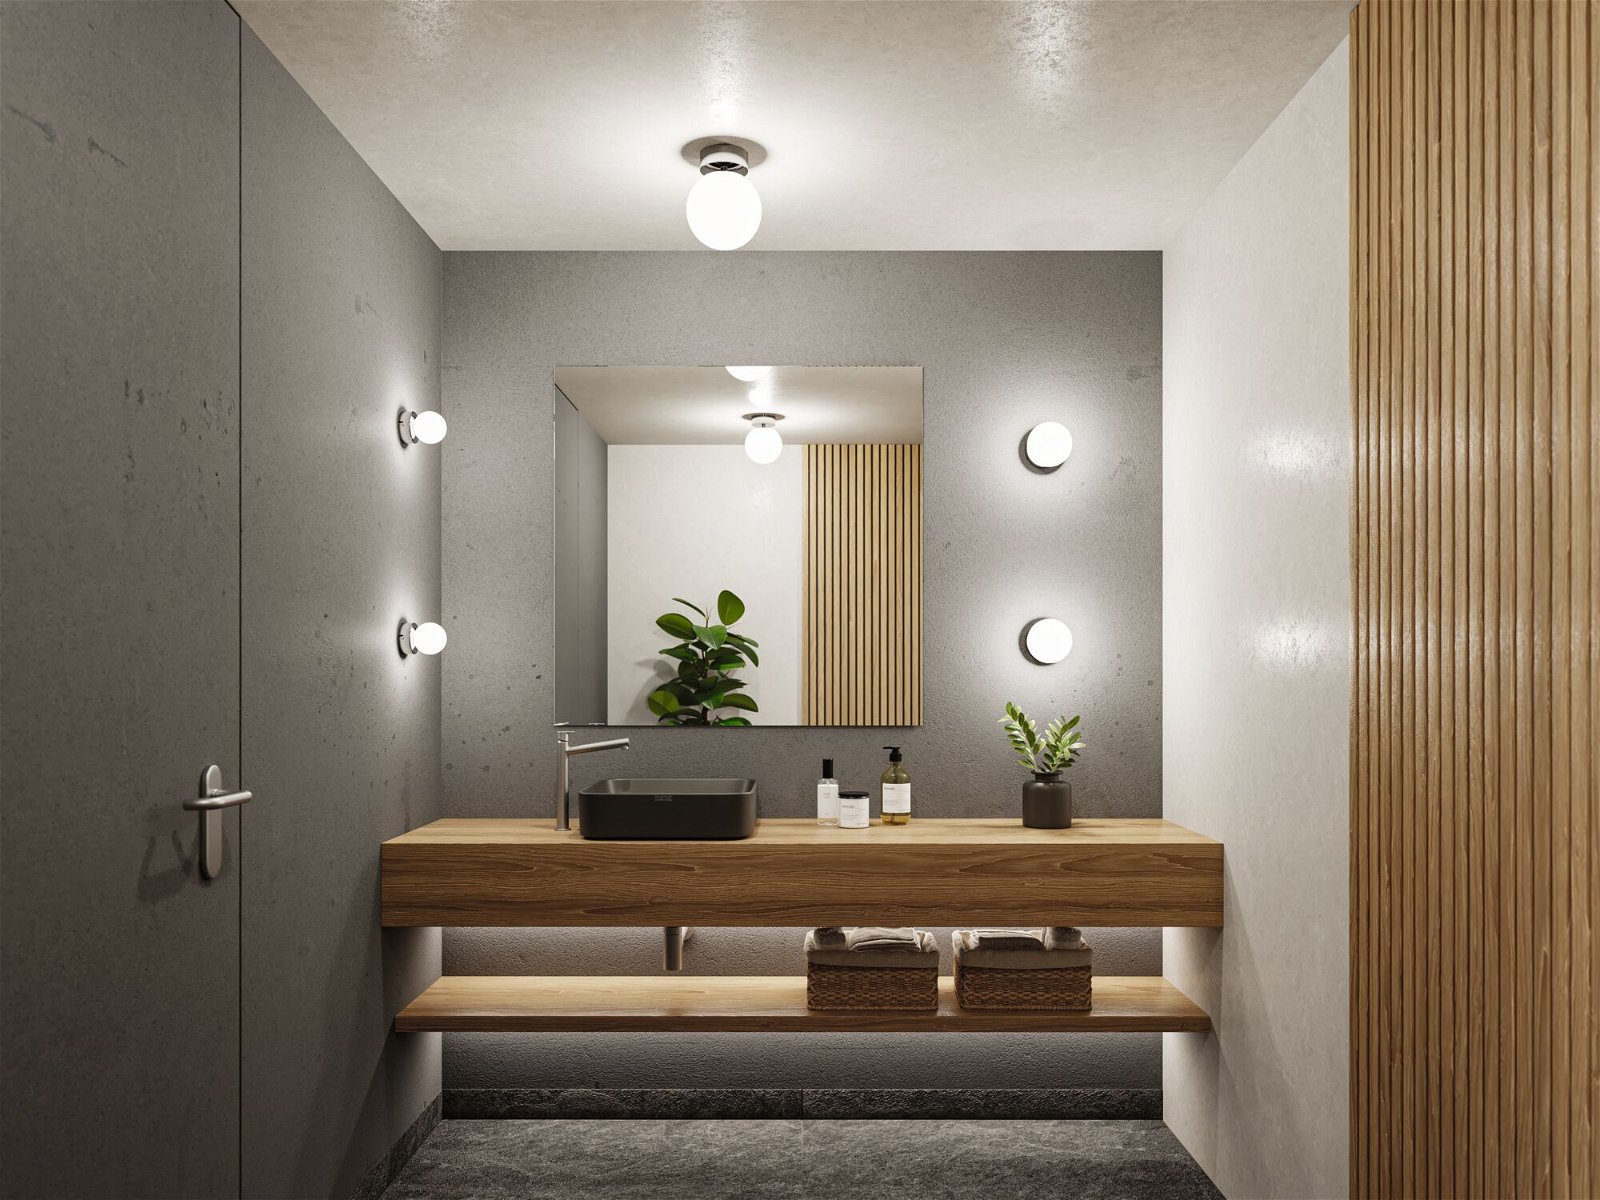 Selection Bathroom LED-plafondlamp Gove IP44 3000K 900lm 230V 9W Chroom/Satijn